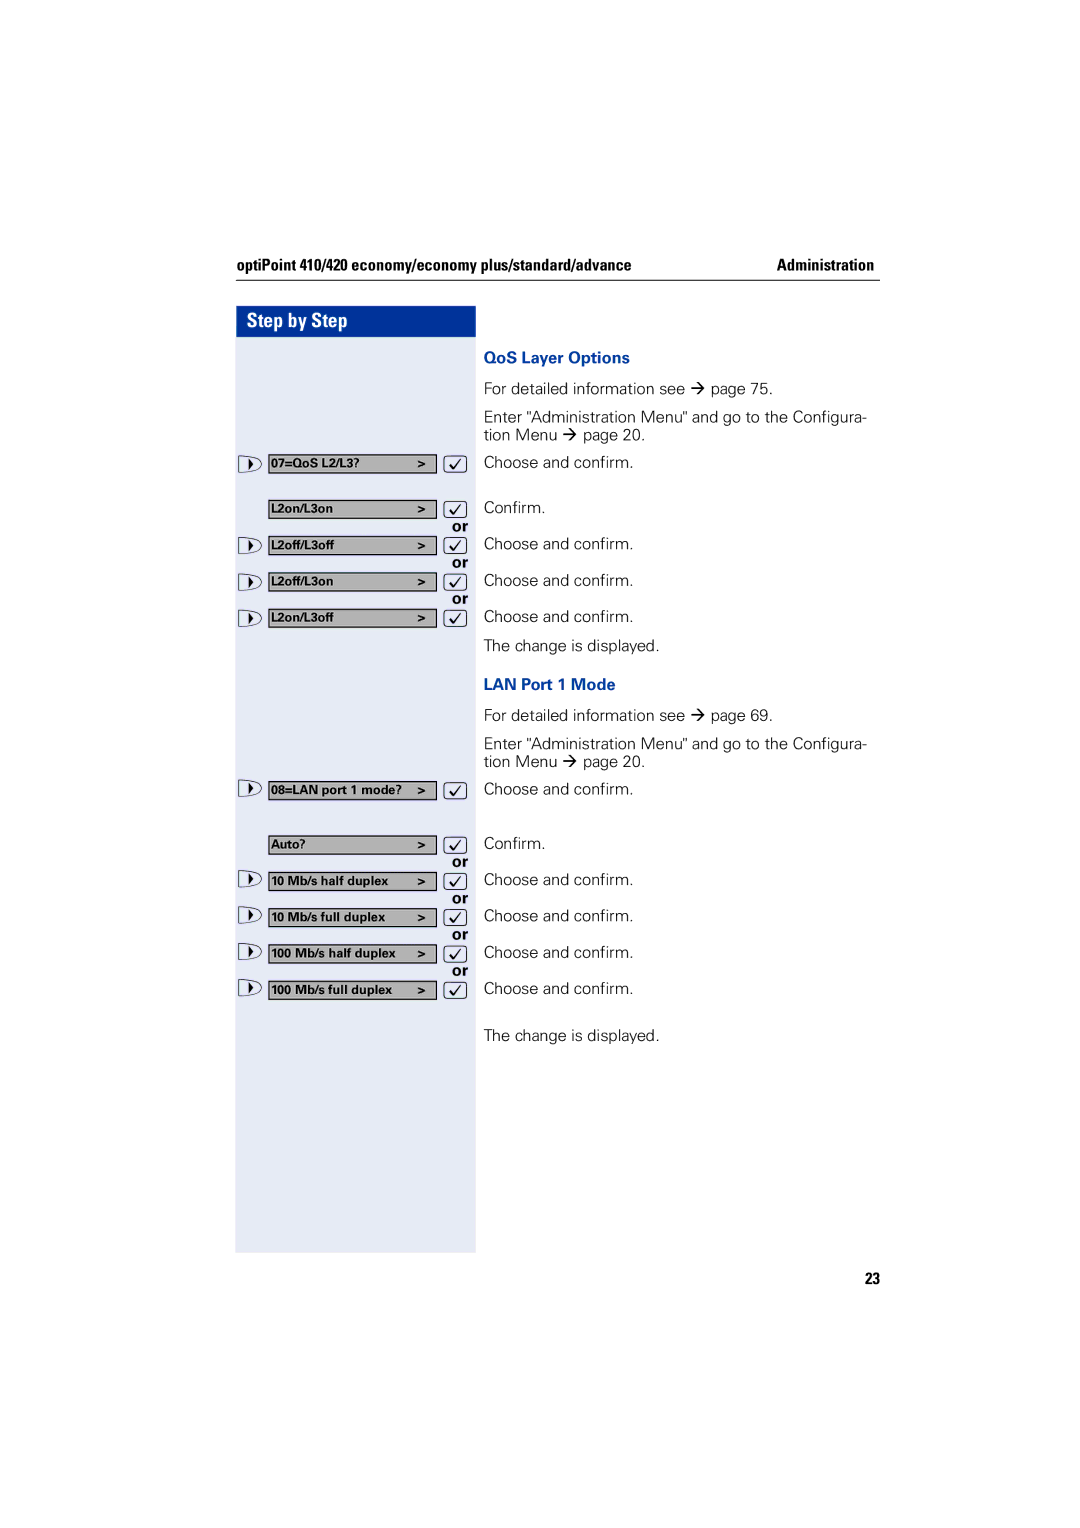 Siemens 2000 manual QoS Layer Options, LAN Port 1 Mode 